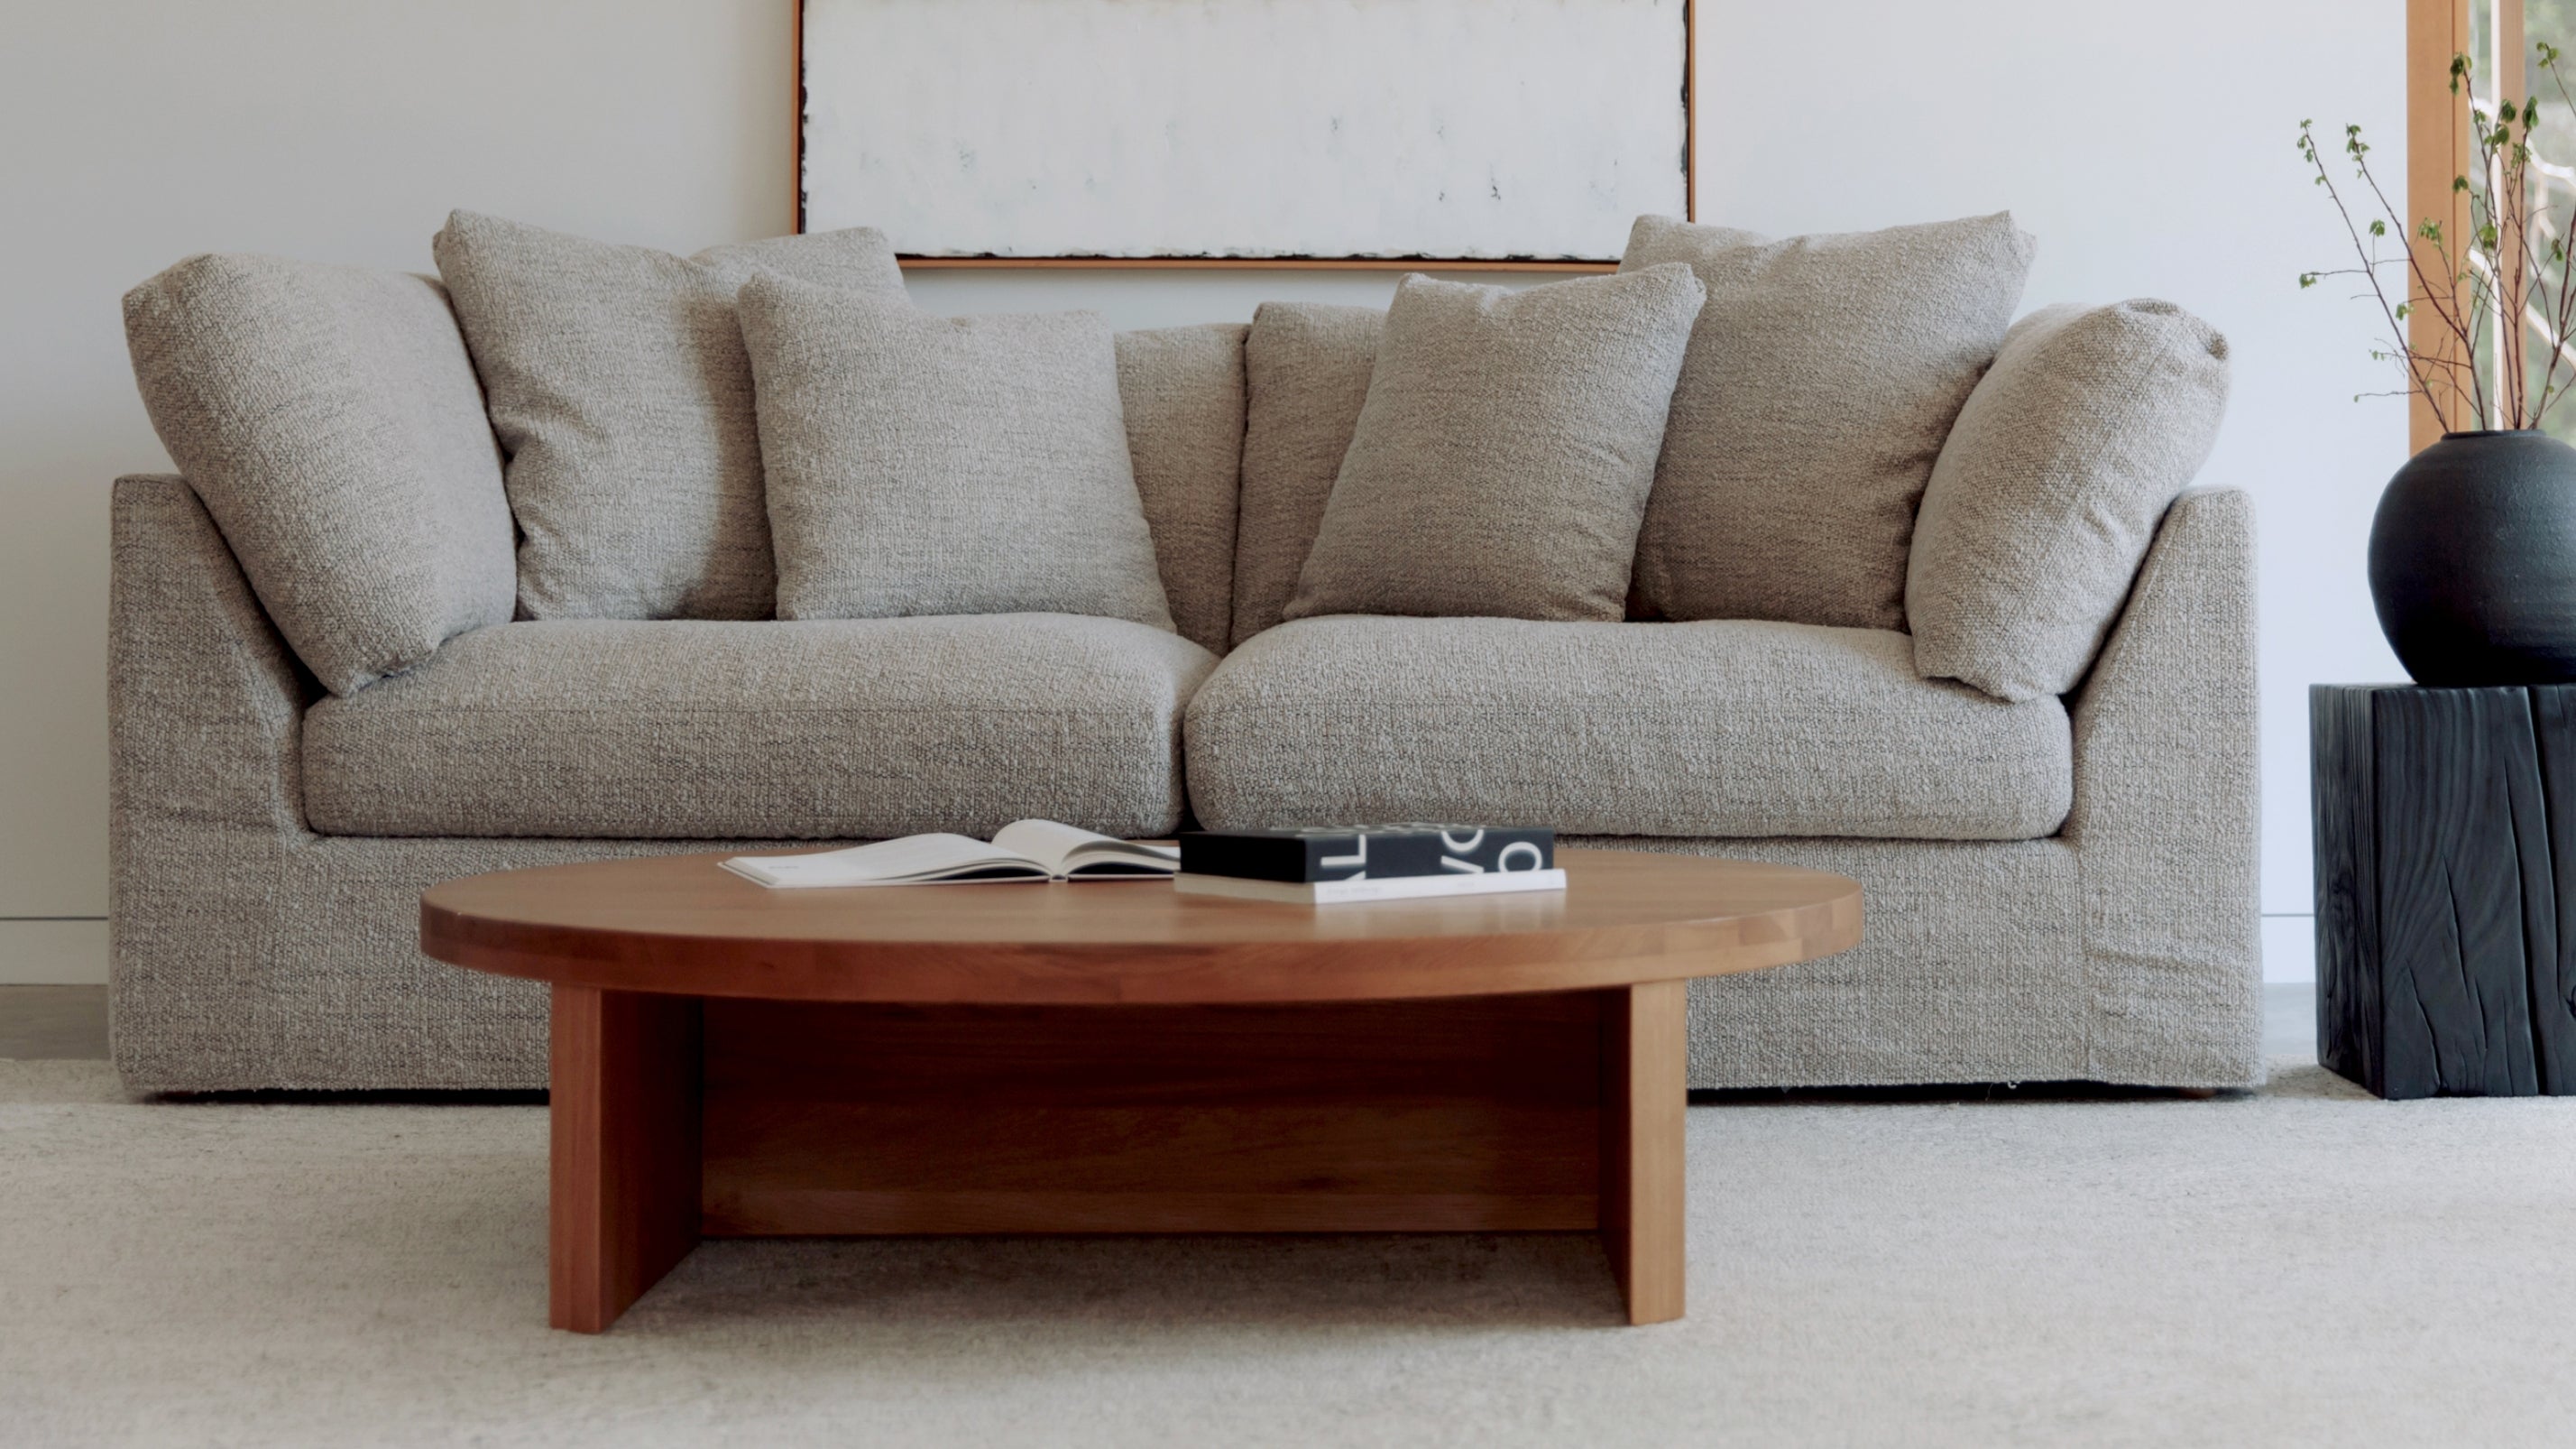 Get Together™ 2-Piece Modular Sofa, Large, Oatmeal - Image 2